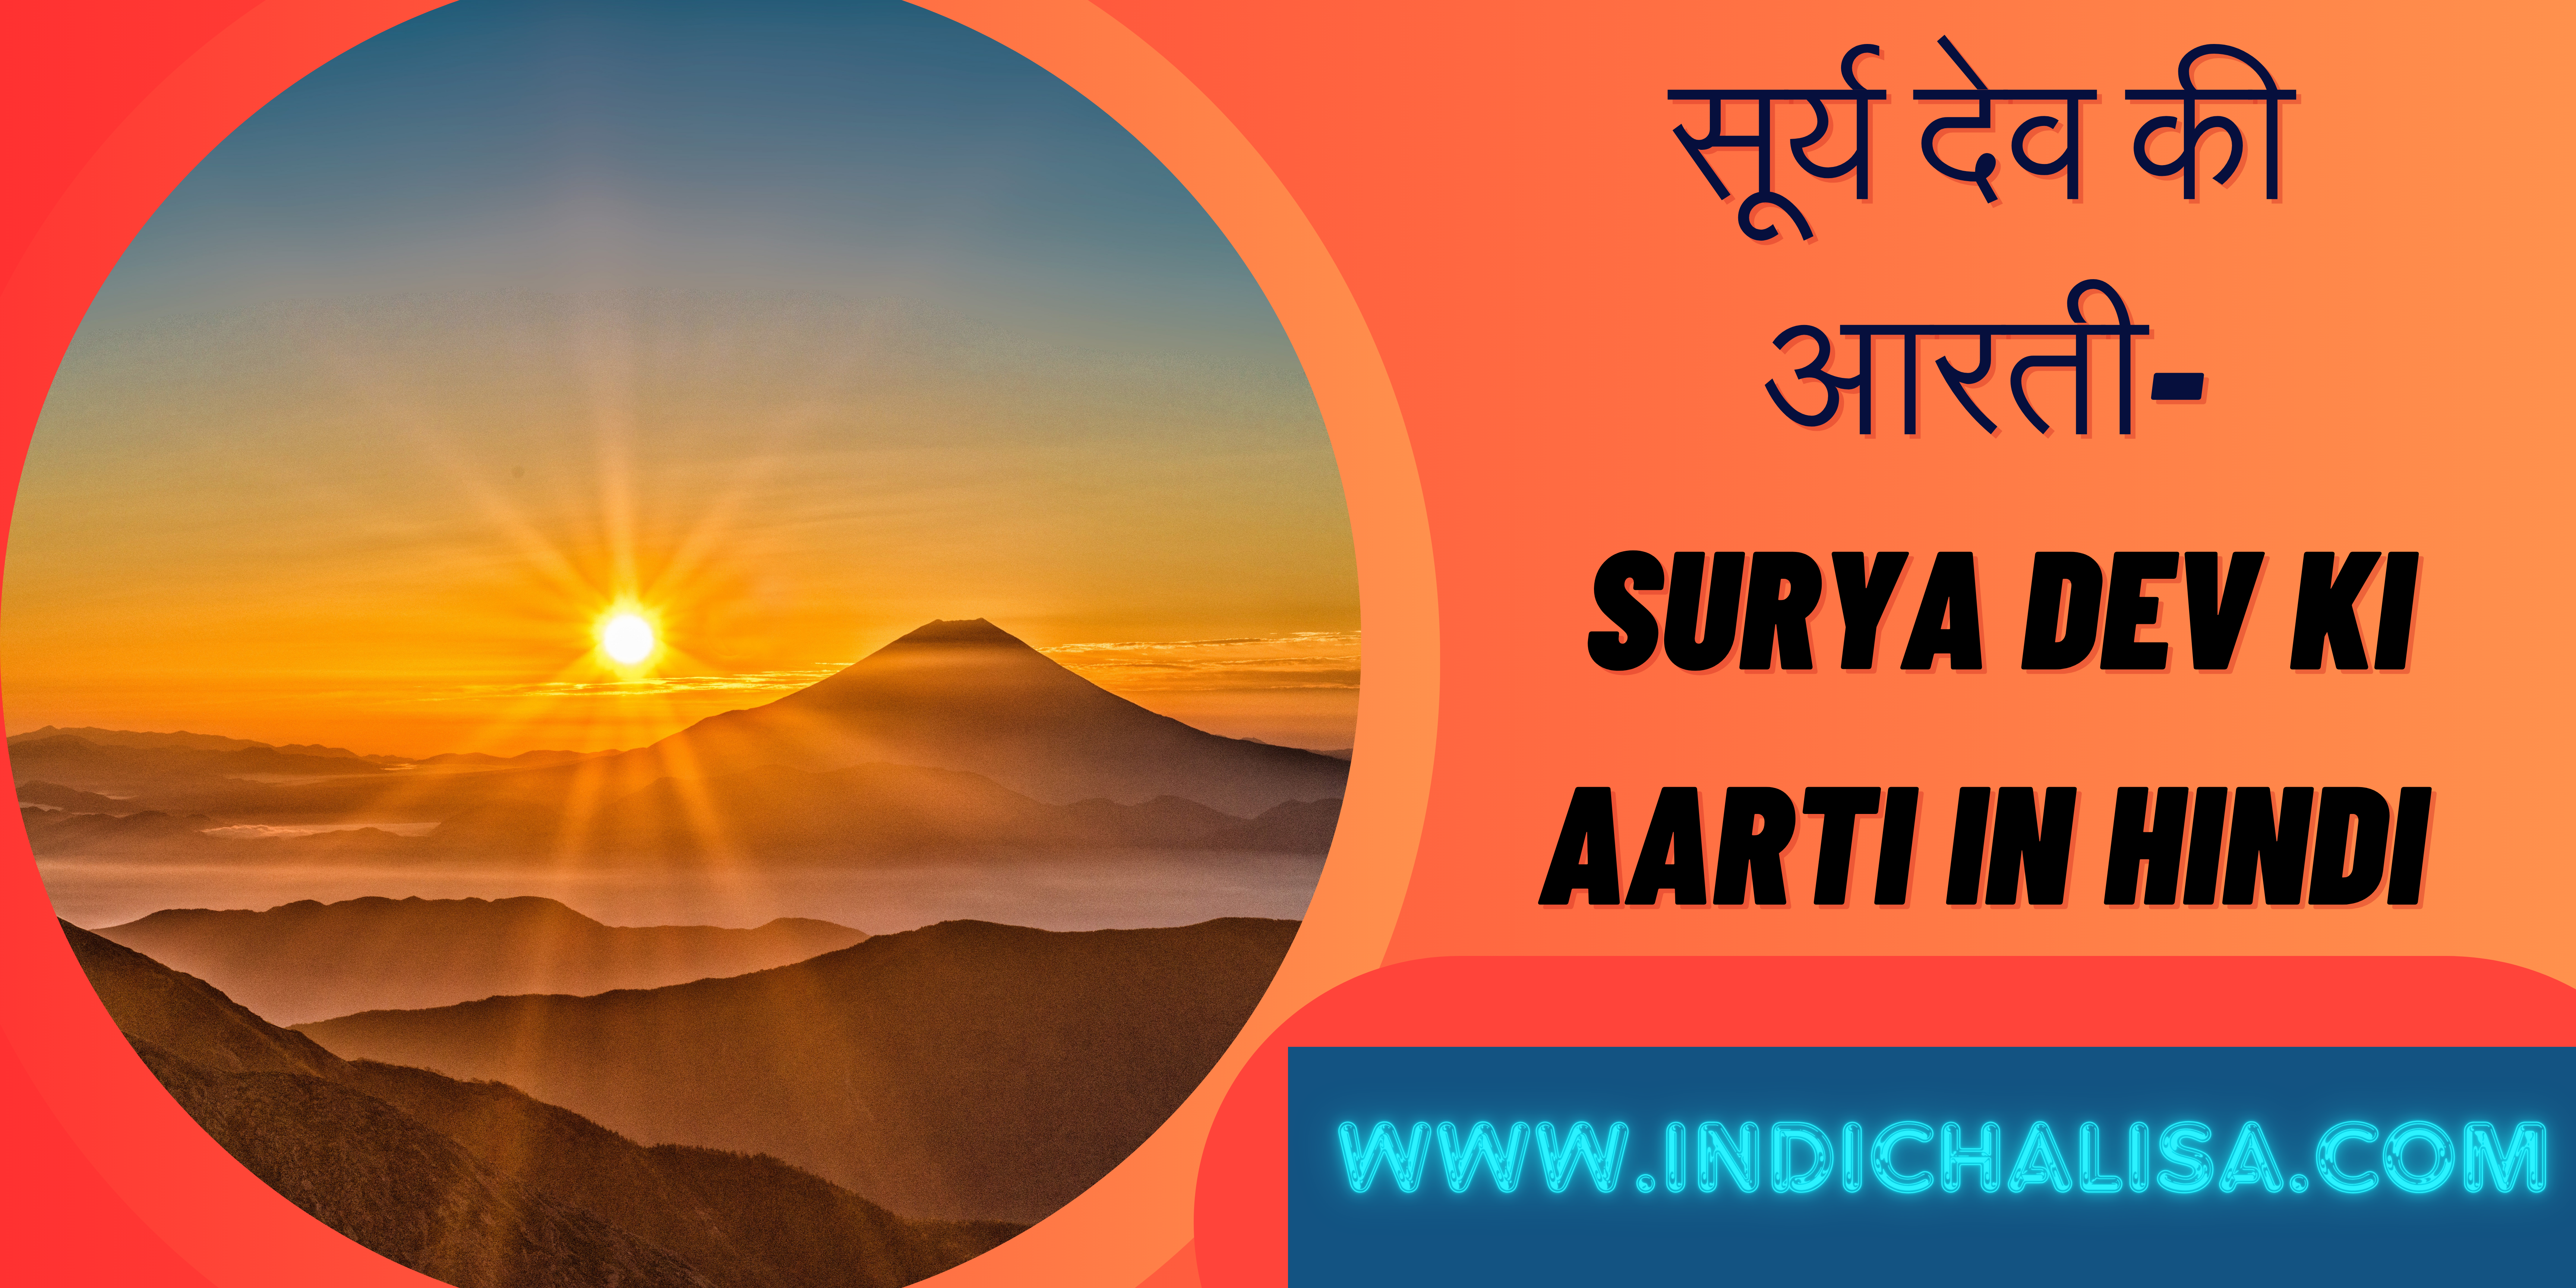 Surya Dev Ki Aarti In Hindi|Surya Dev Ki Aarti In Hindi| Indichalisa|Indichalisa